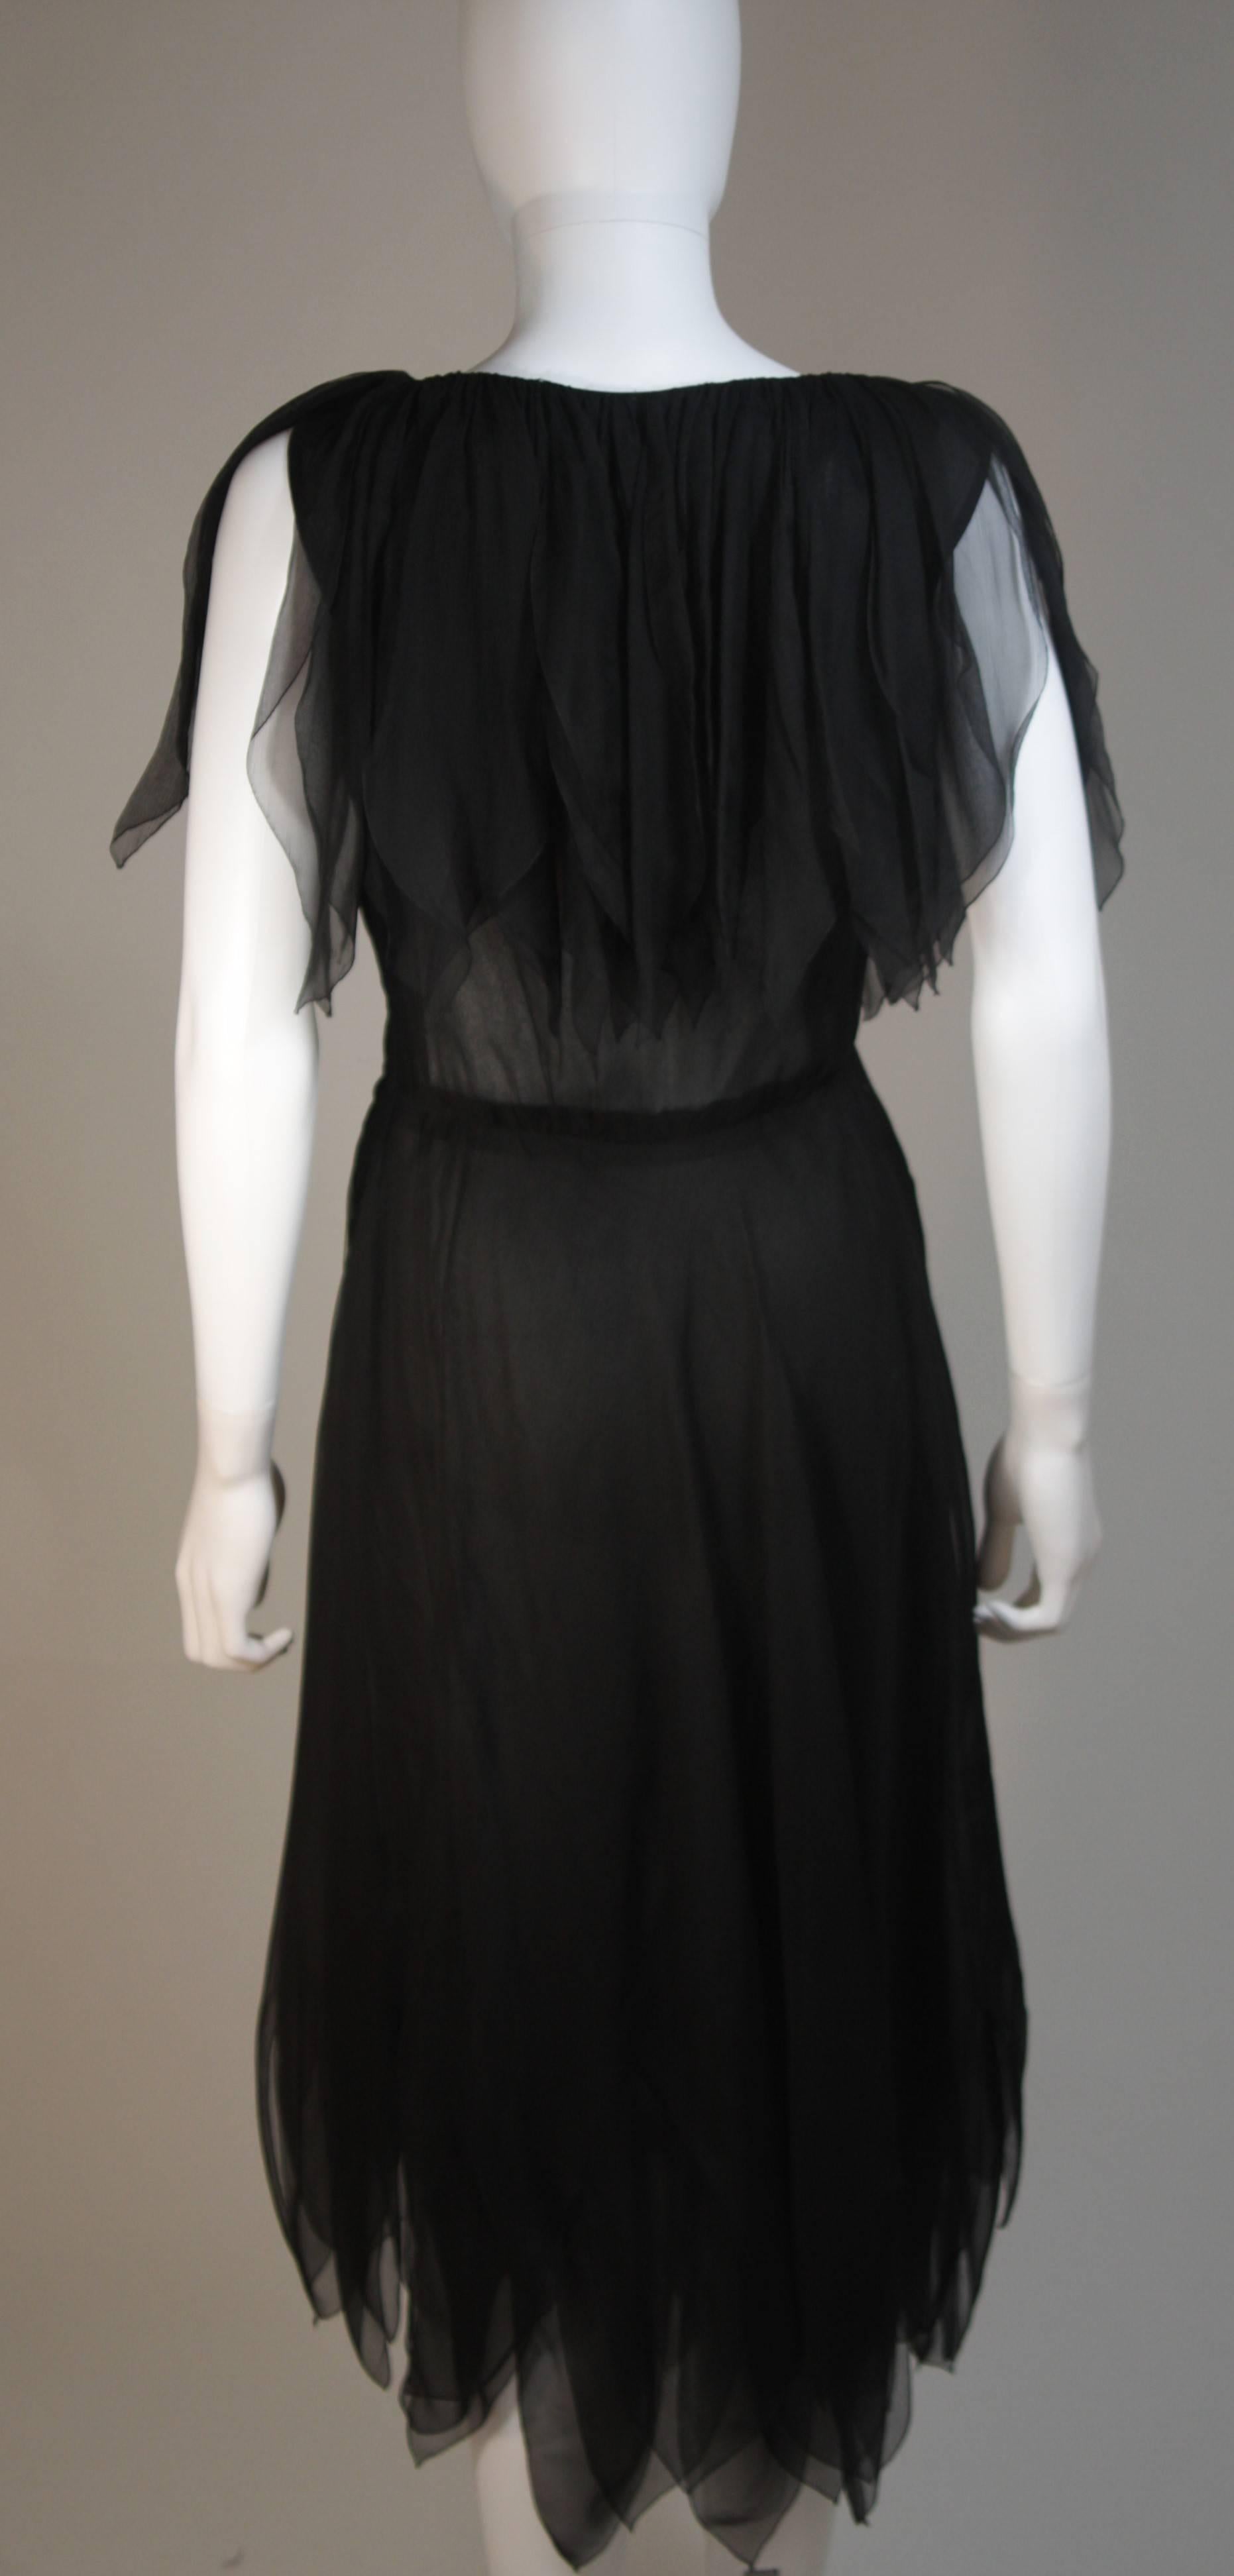 CHRISTIAN DIOR COUTURE Layered Black Silk Chiffon Cocktail Dress Size 4-6 5